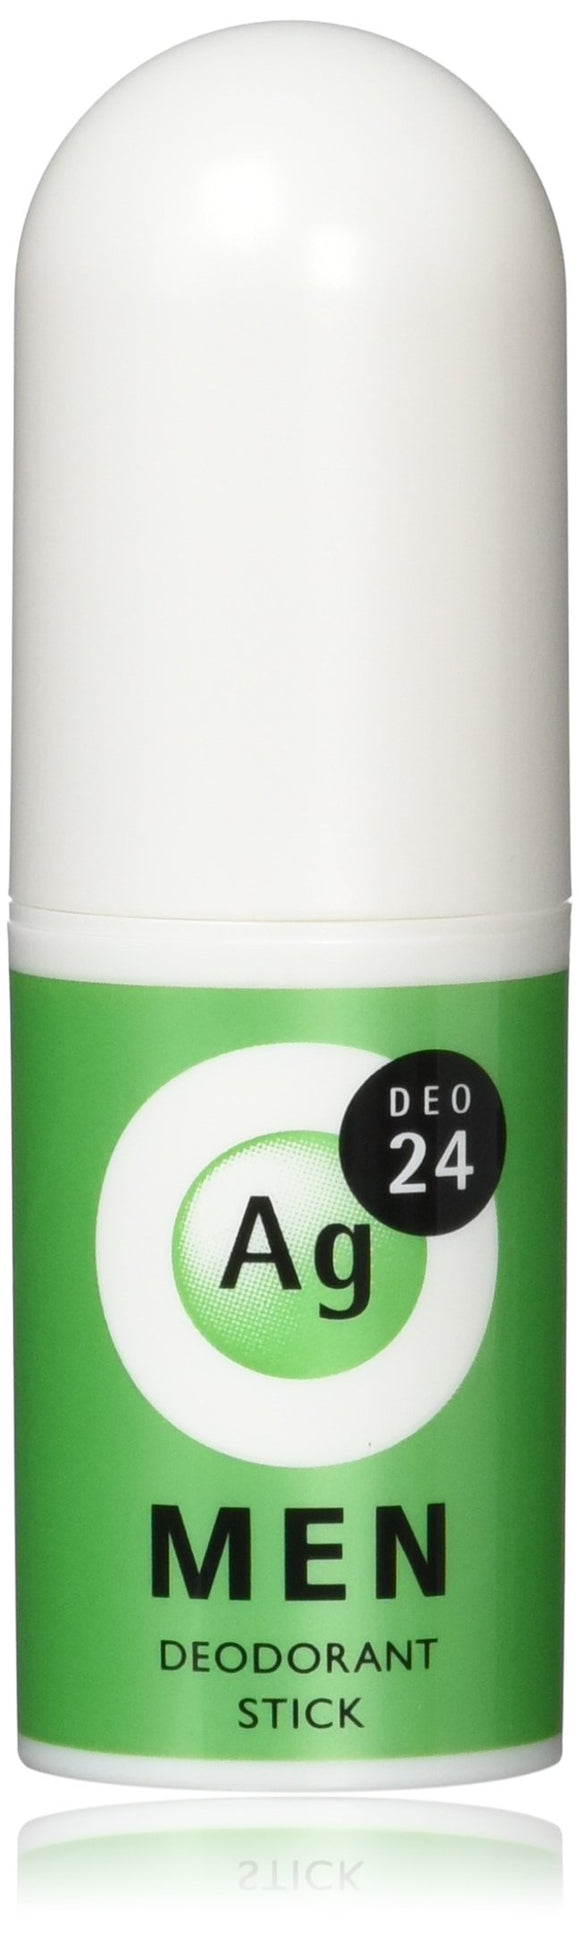 AG Deo 24 Men's Deodorant Stick Stylish Citrus Fragrance 20g